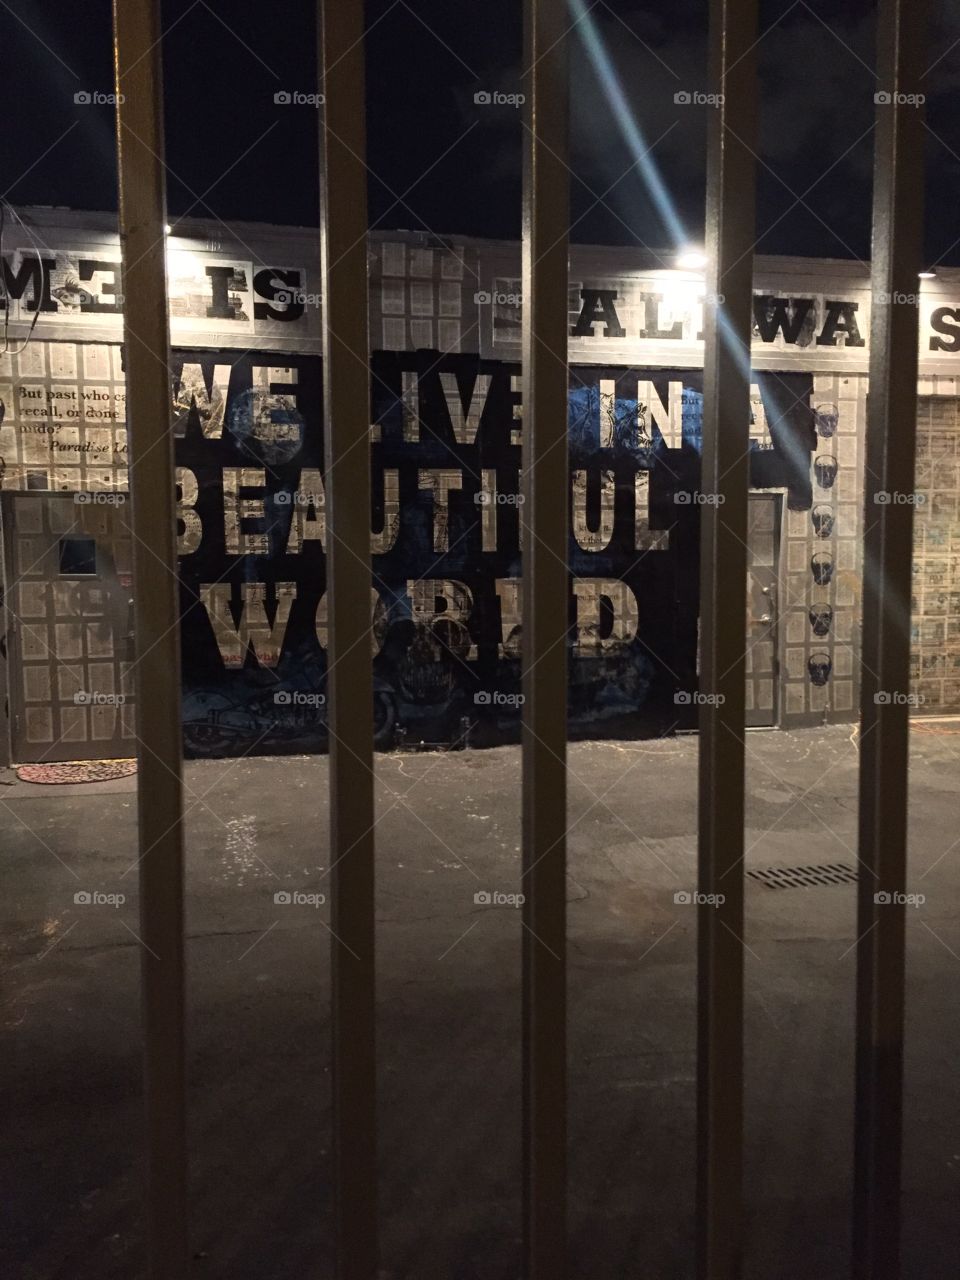 Beauty behind bars